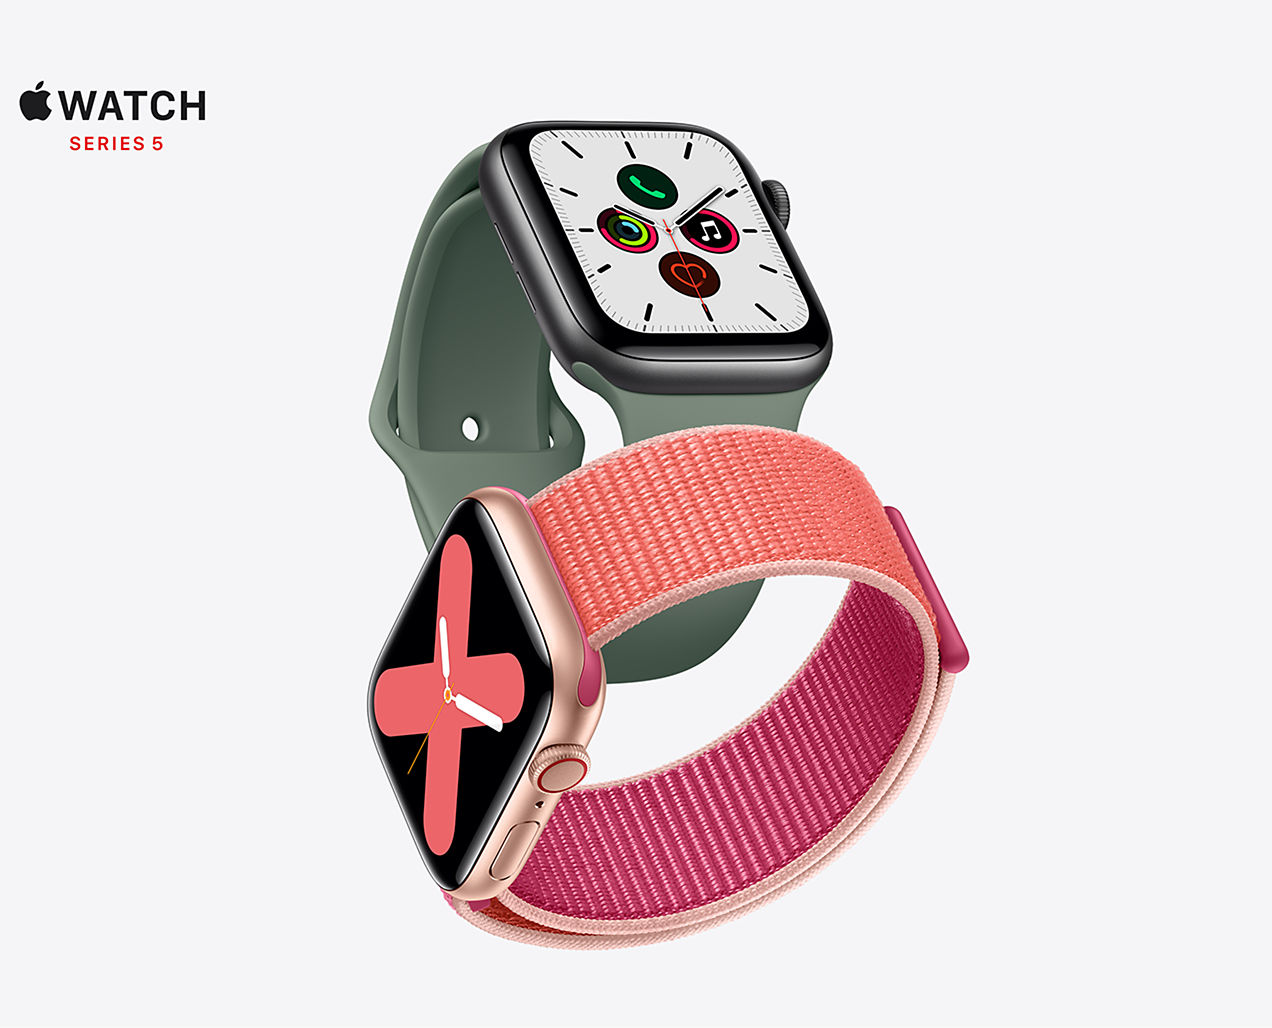 Apple Watch Series 5 Specs, Price & More. Shop at Verizon